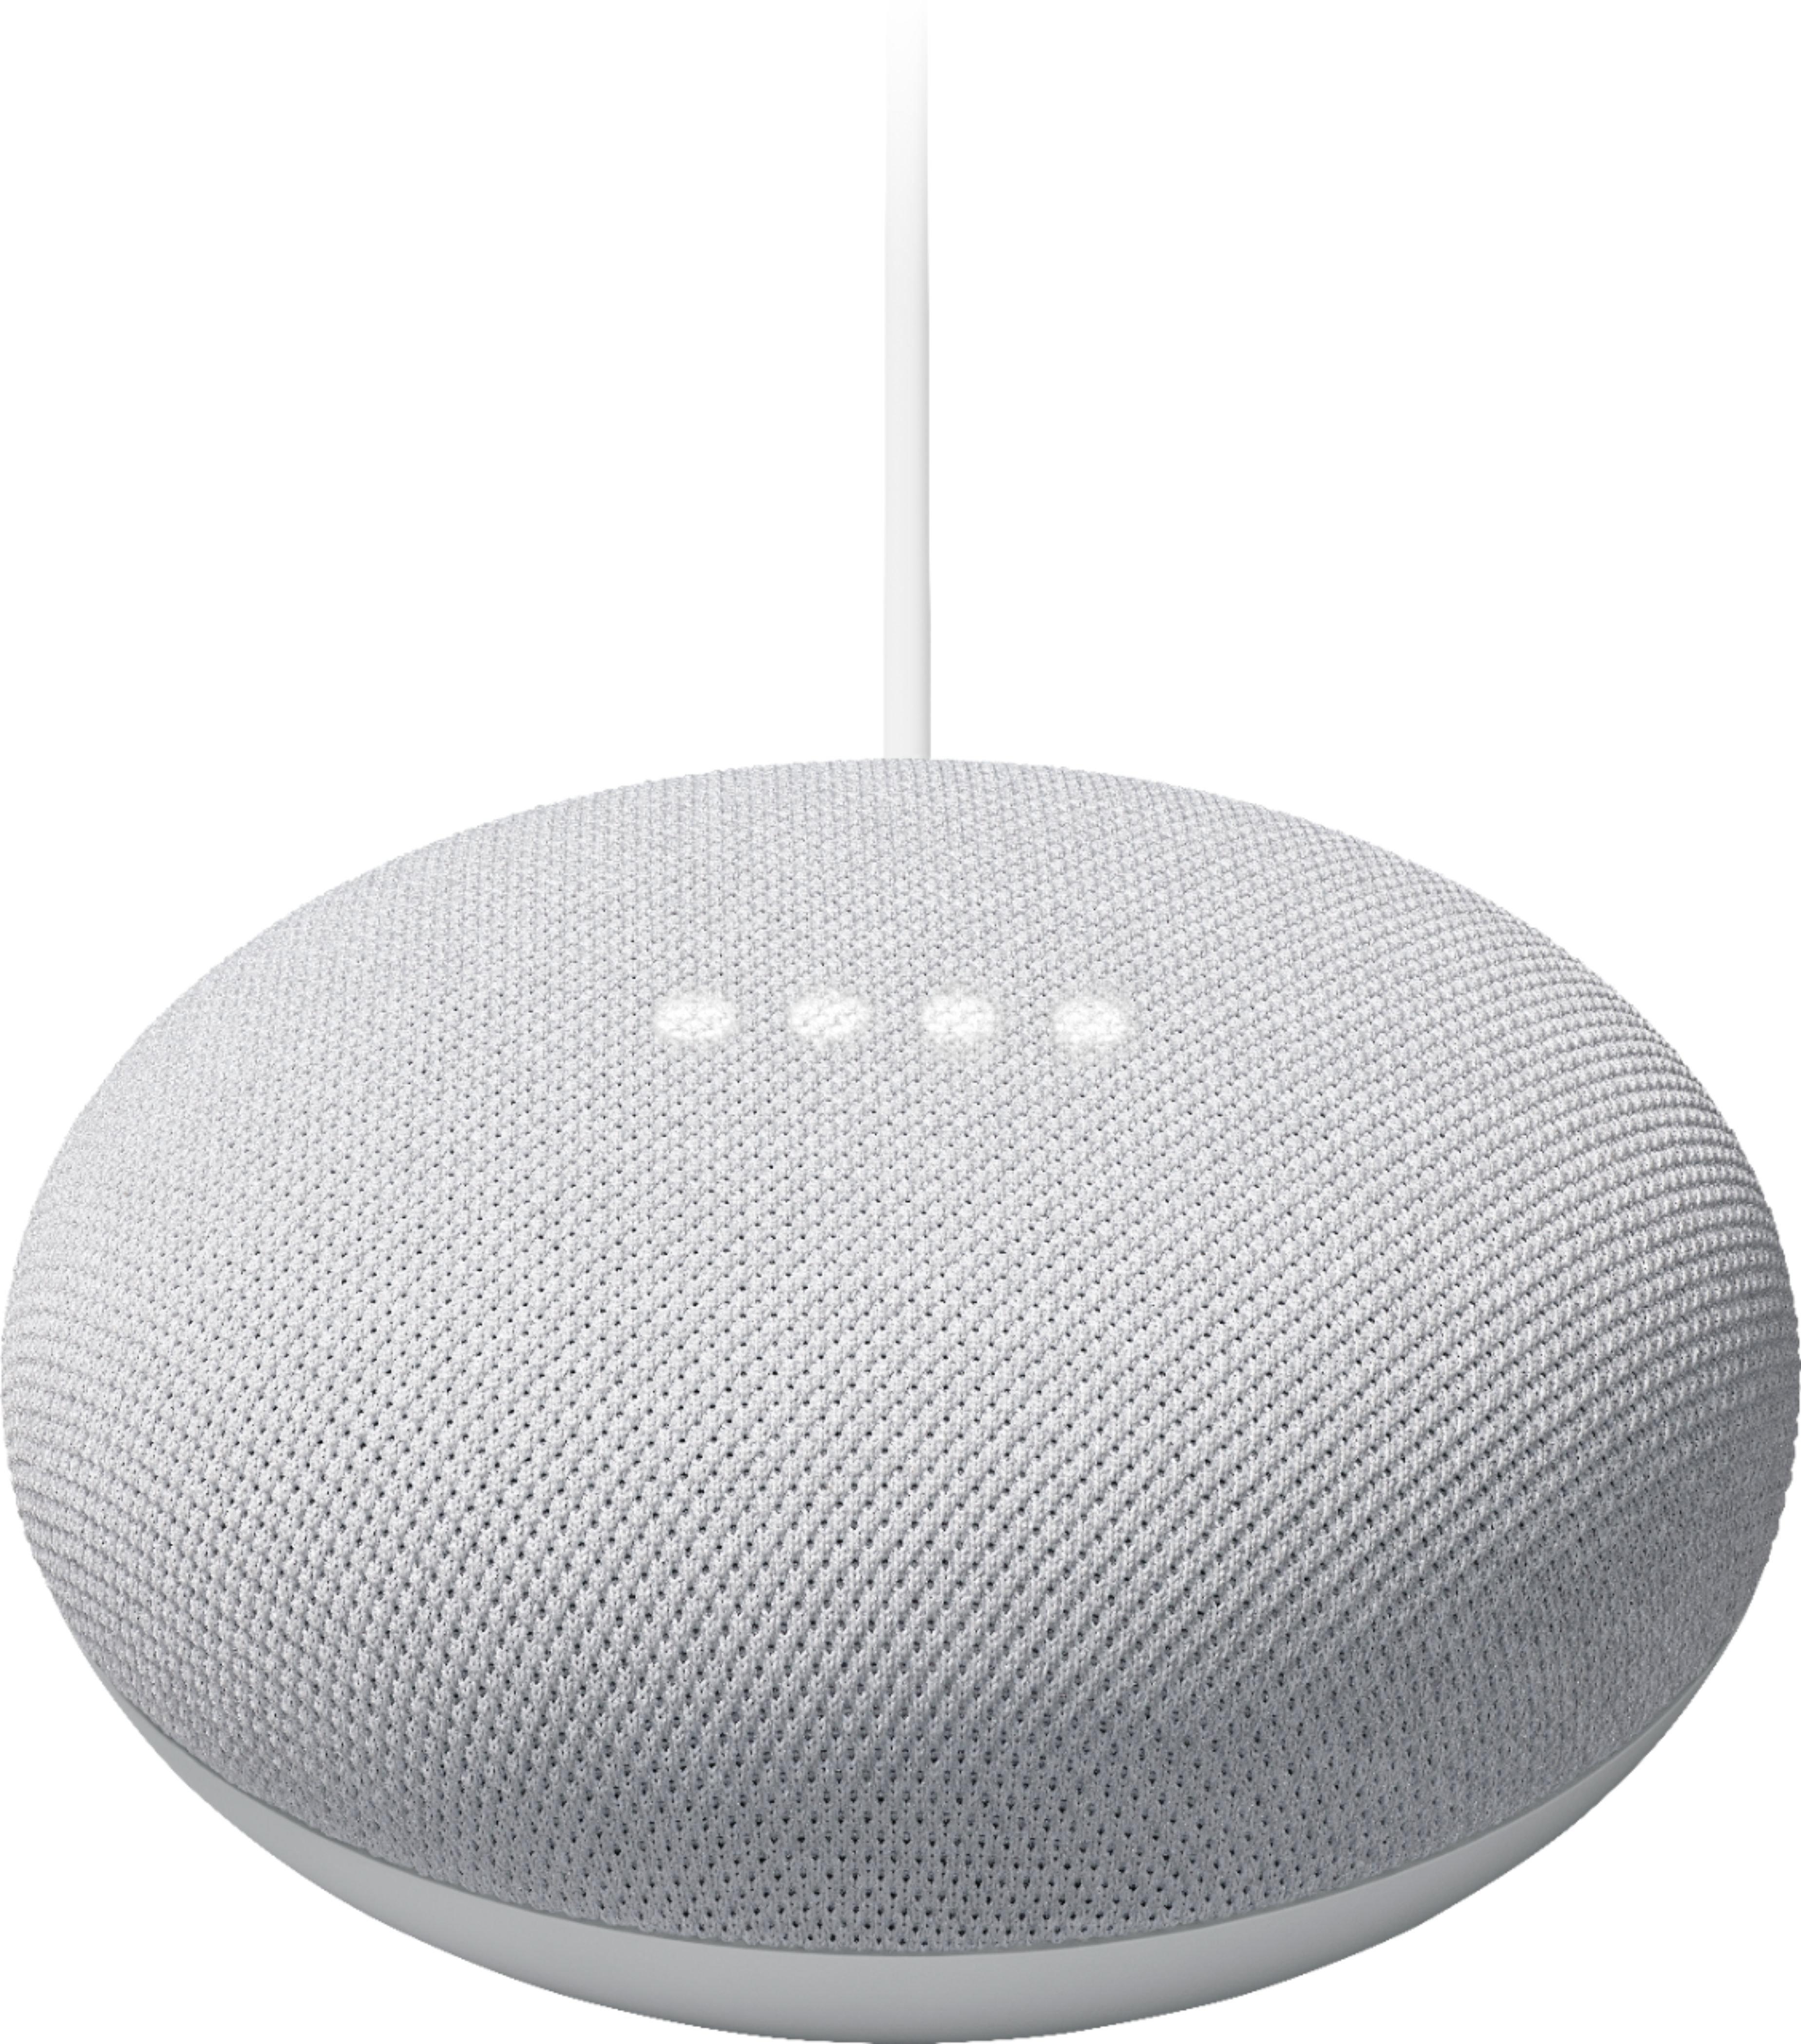 list item 3 of 5 Google Nest Mini Smart Speaker 2nd Generation